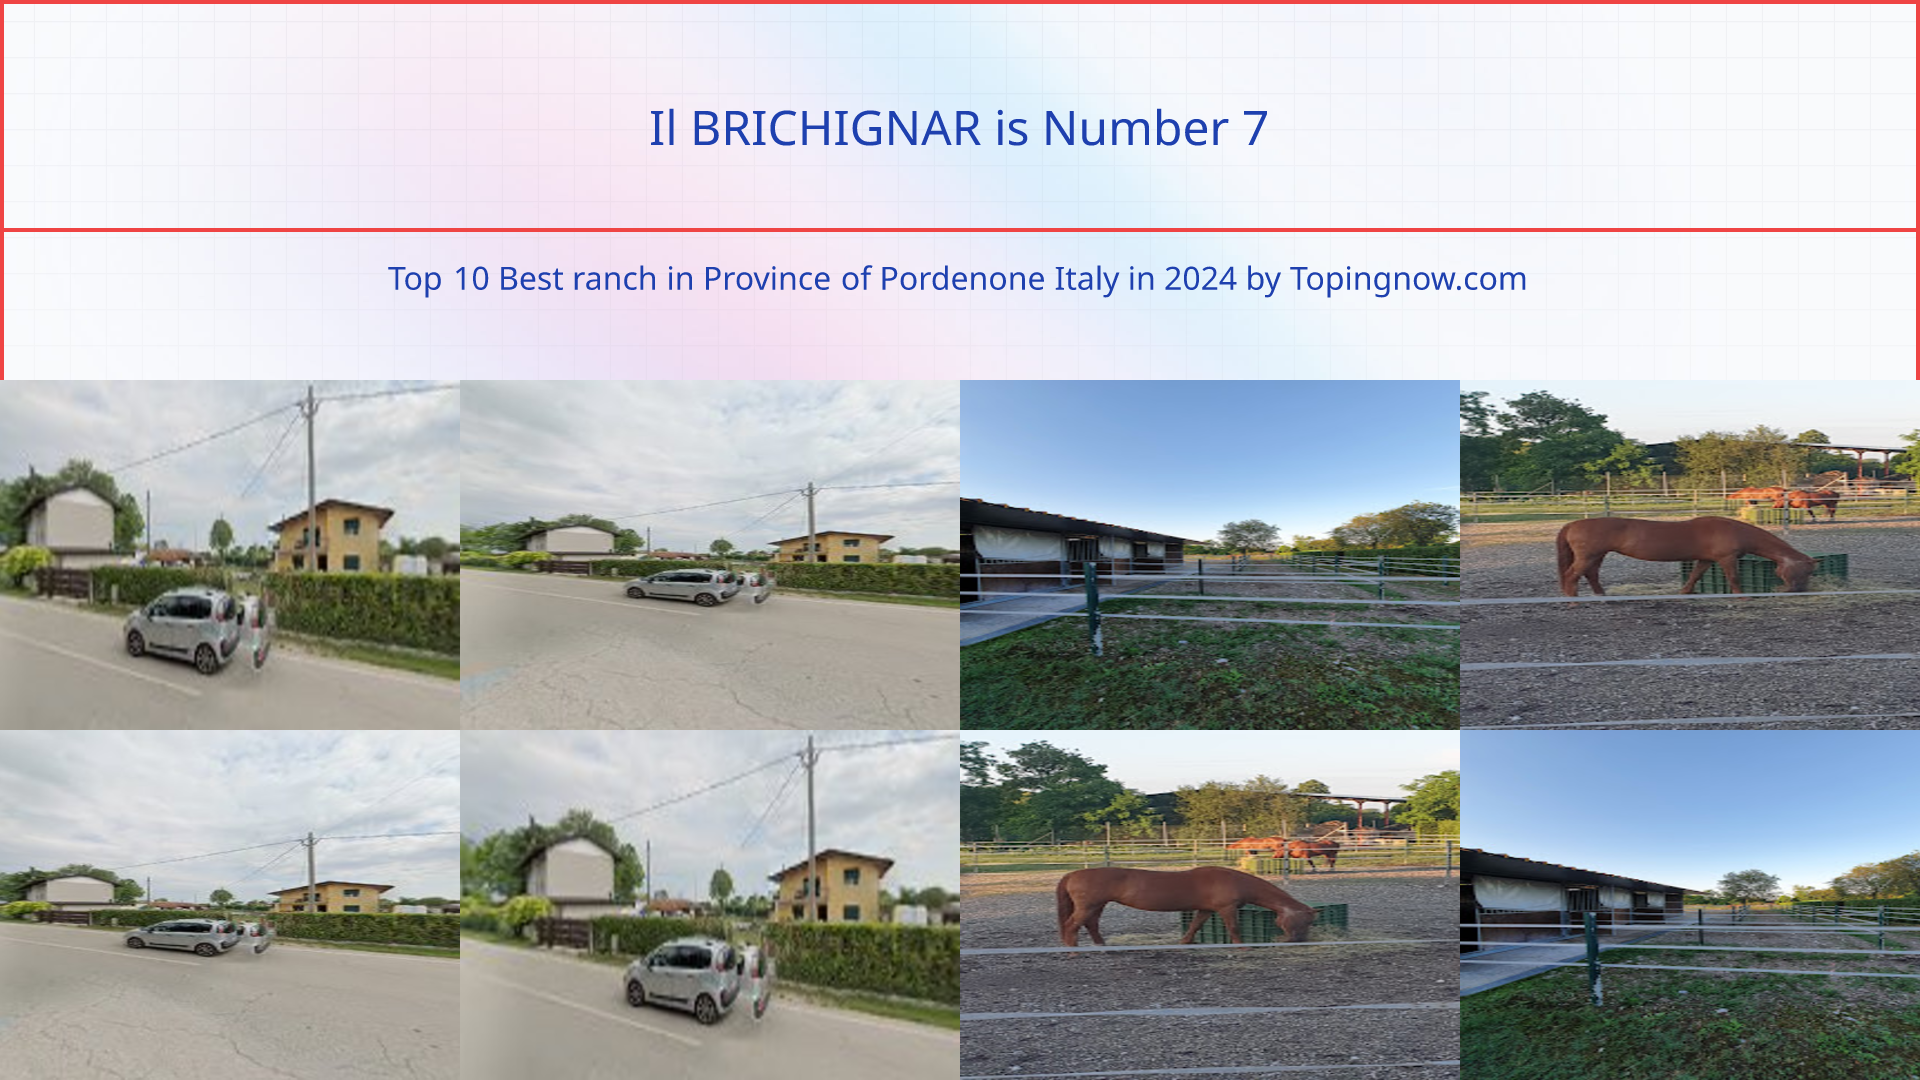 Il BRICHIGNAR: Top 10 Best ranch in Province of Pordenone Italy in 2024